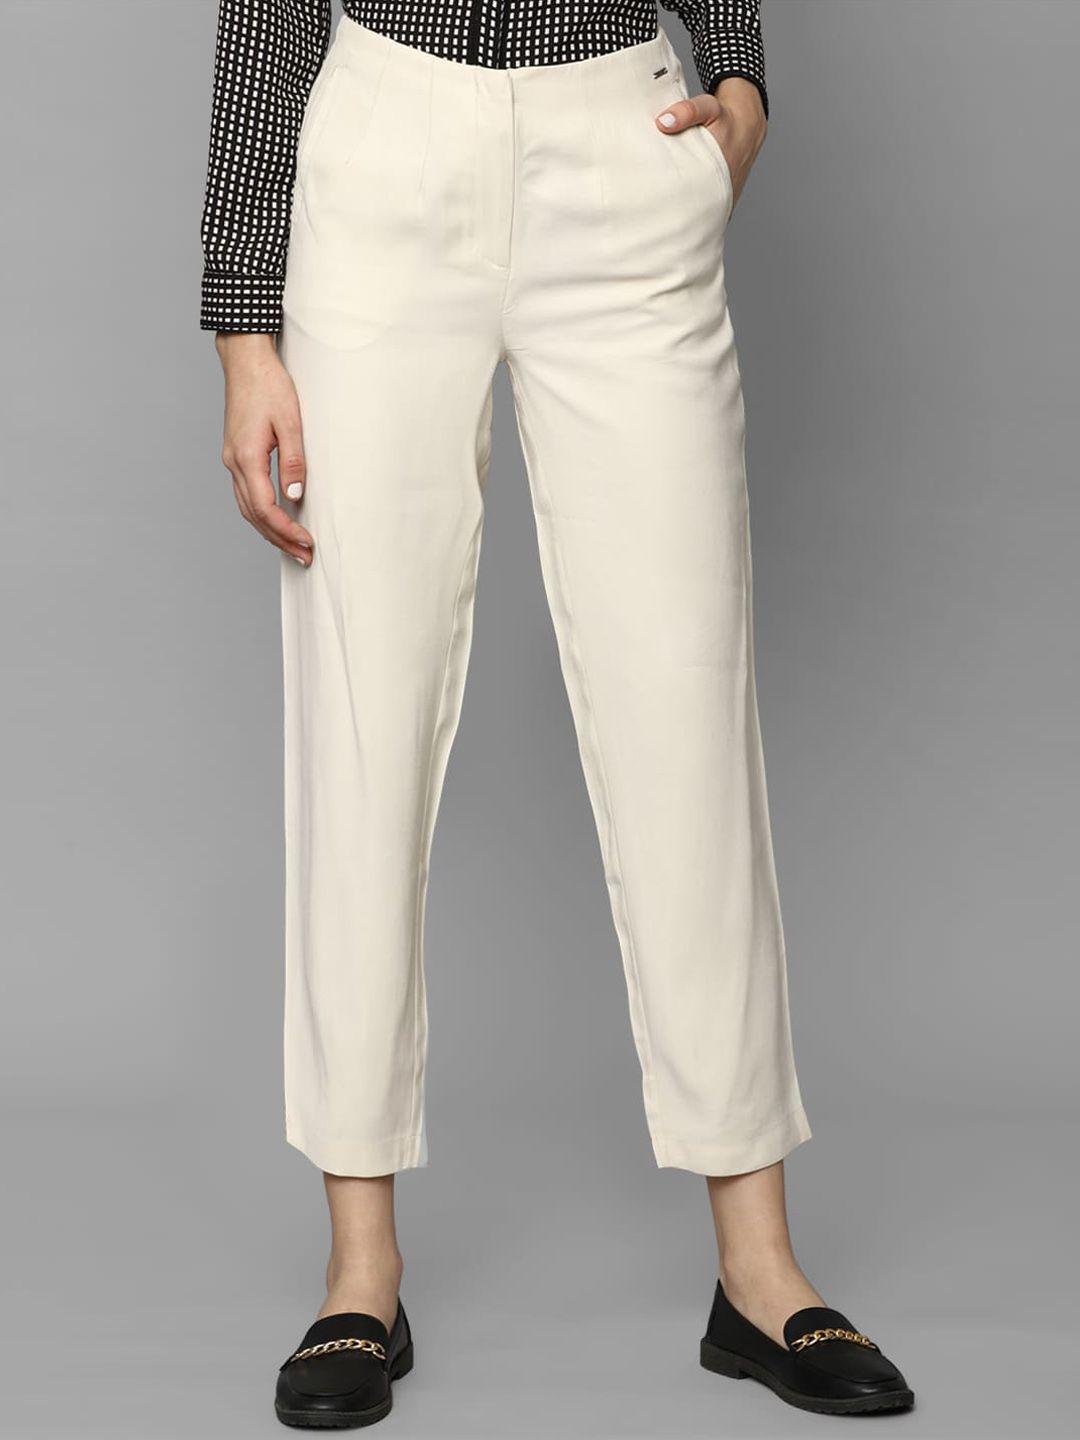 allen-solly-woman-mid-rise-cigarette-trousers